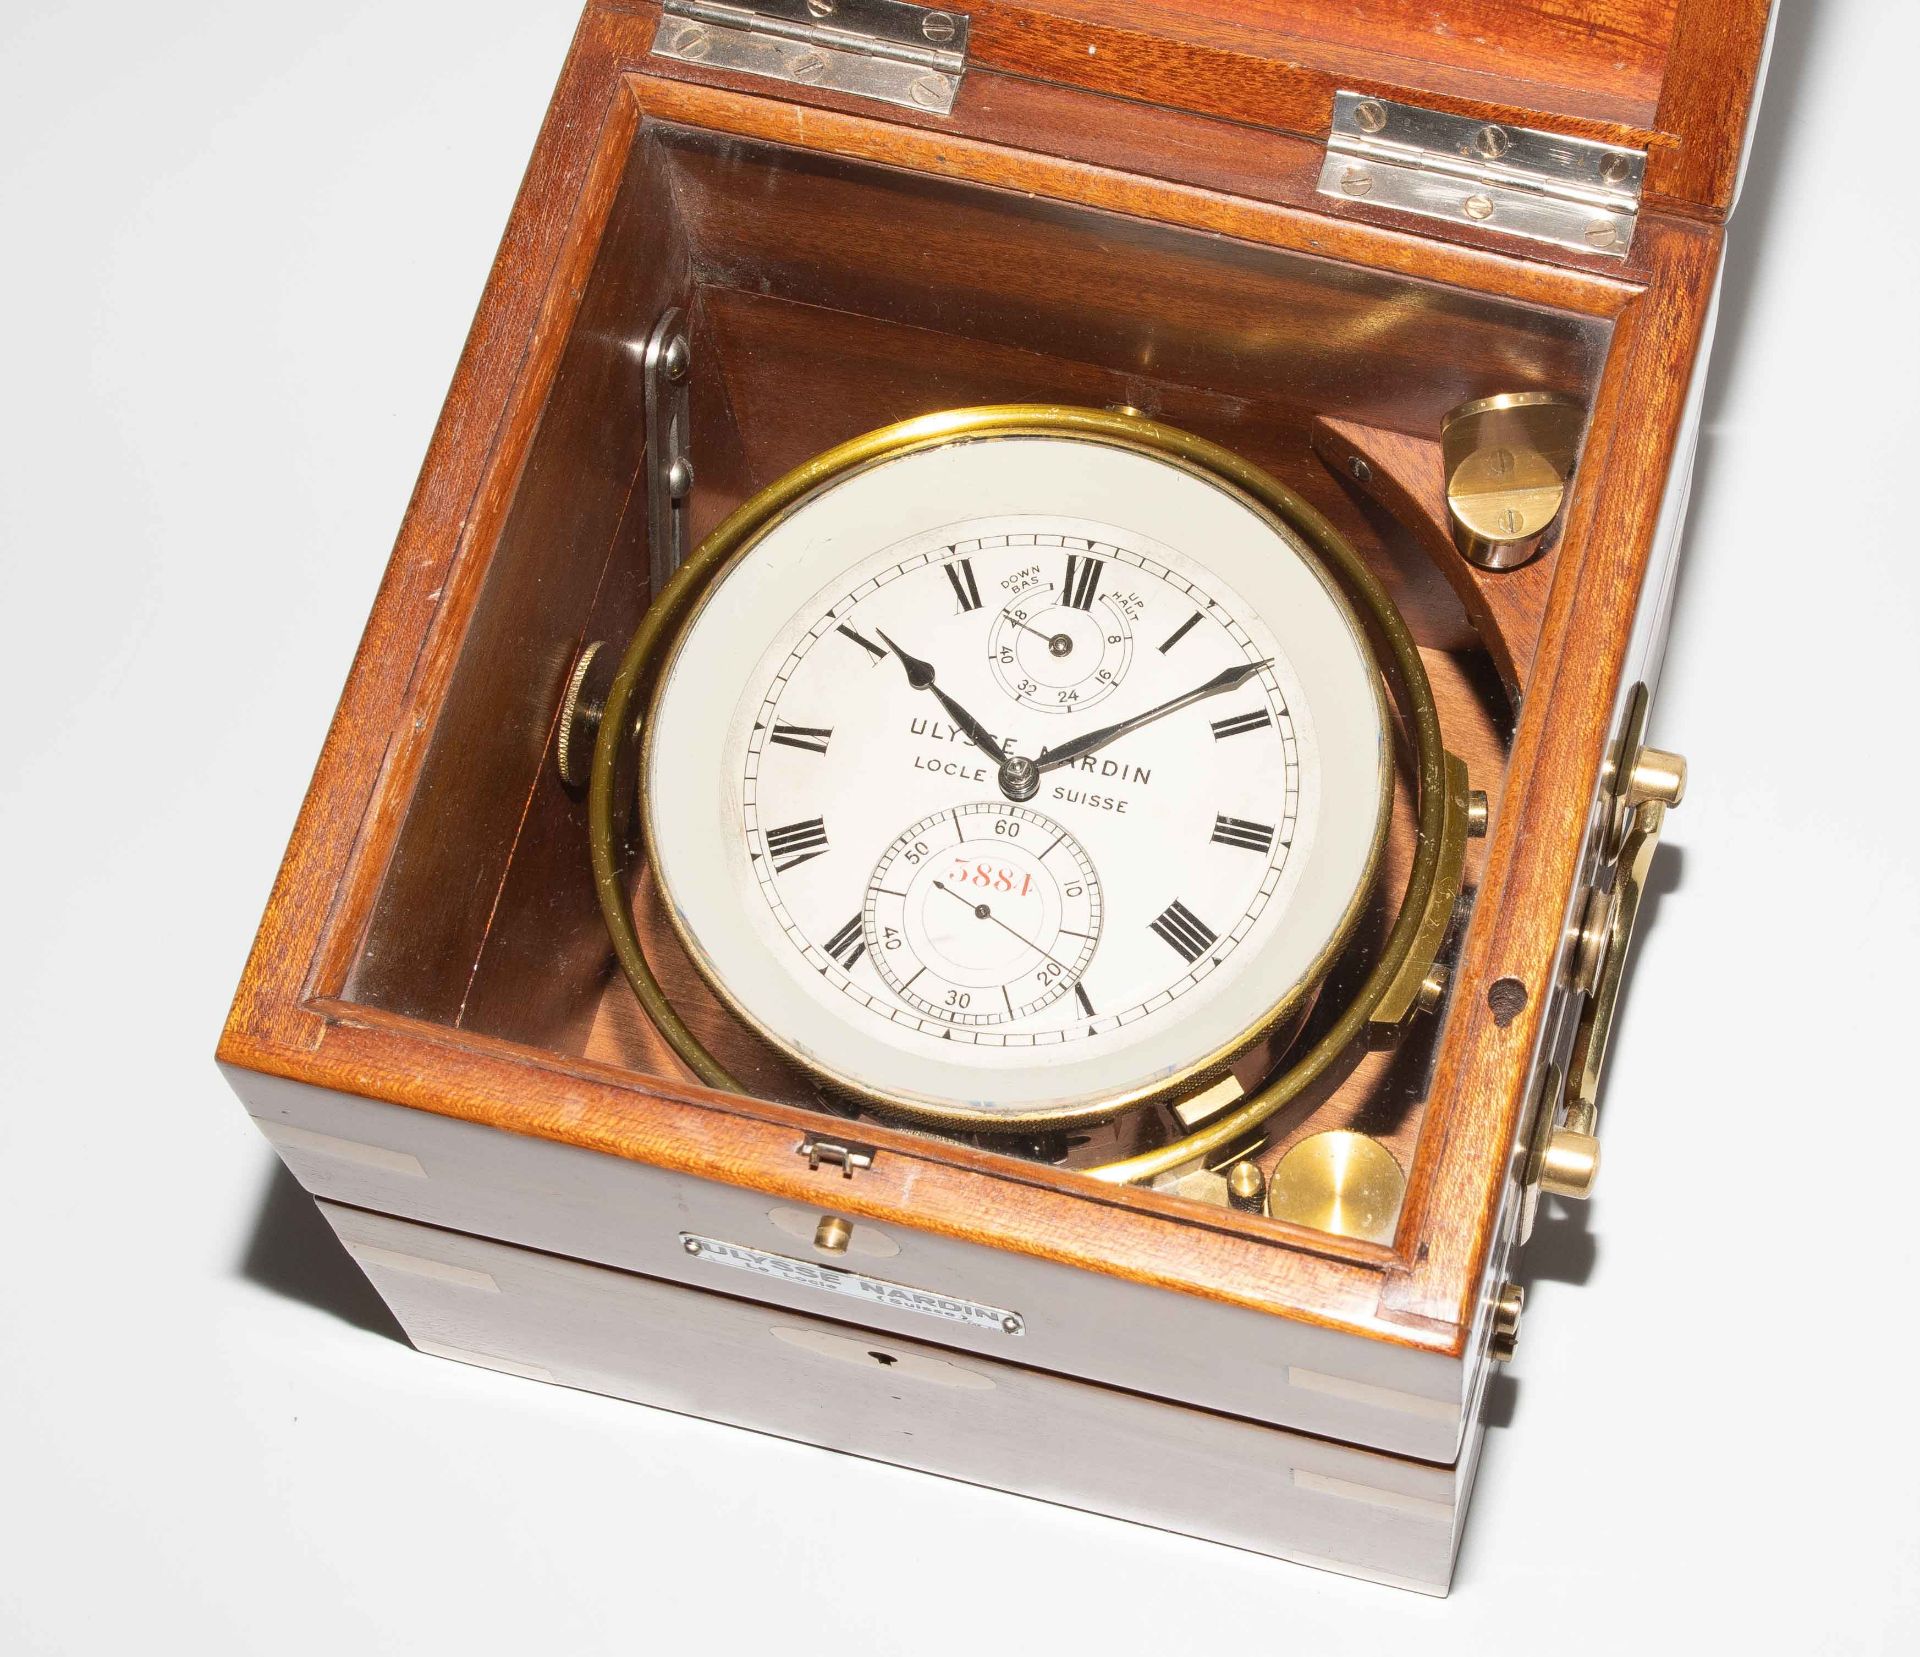 Schiffschronometer "Ulysse-Nardin" - Image 7 of 9